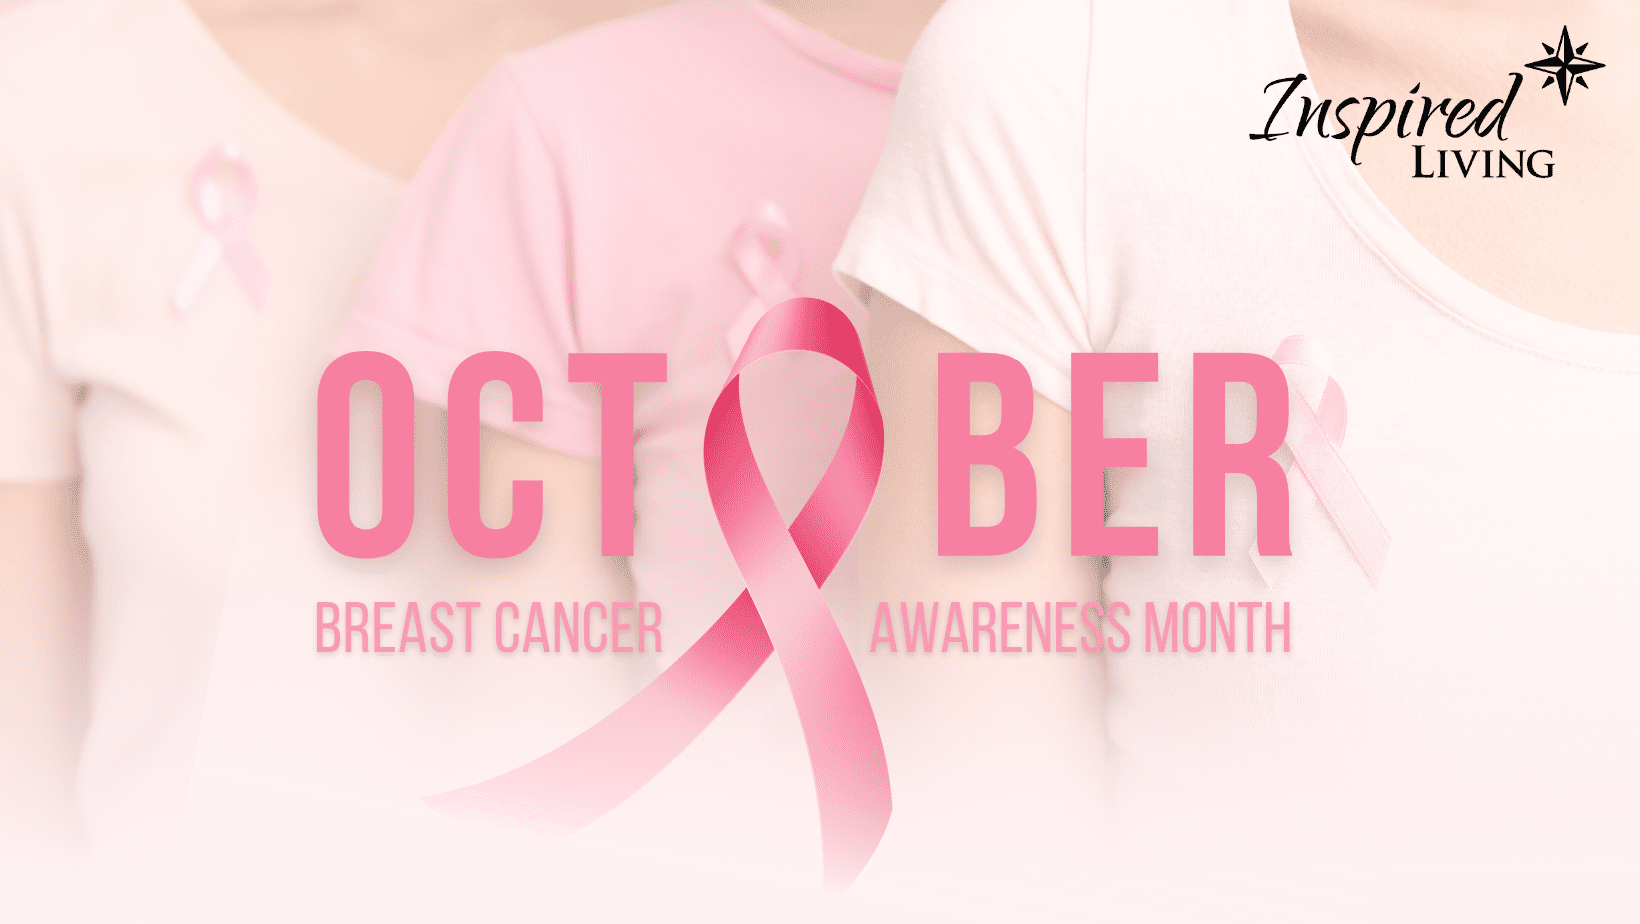 LWR Breast Cancer Awareness Walk Facebook Cover